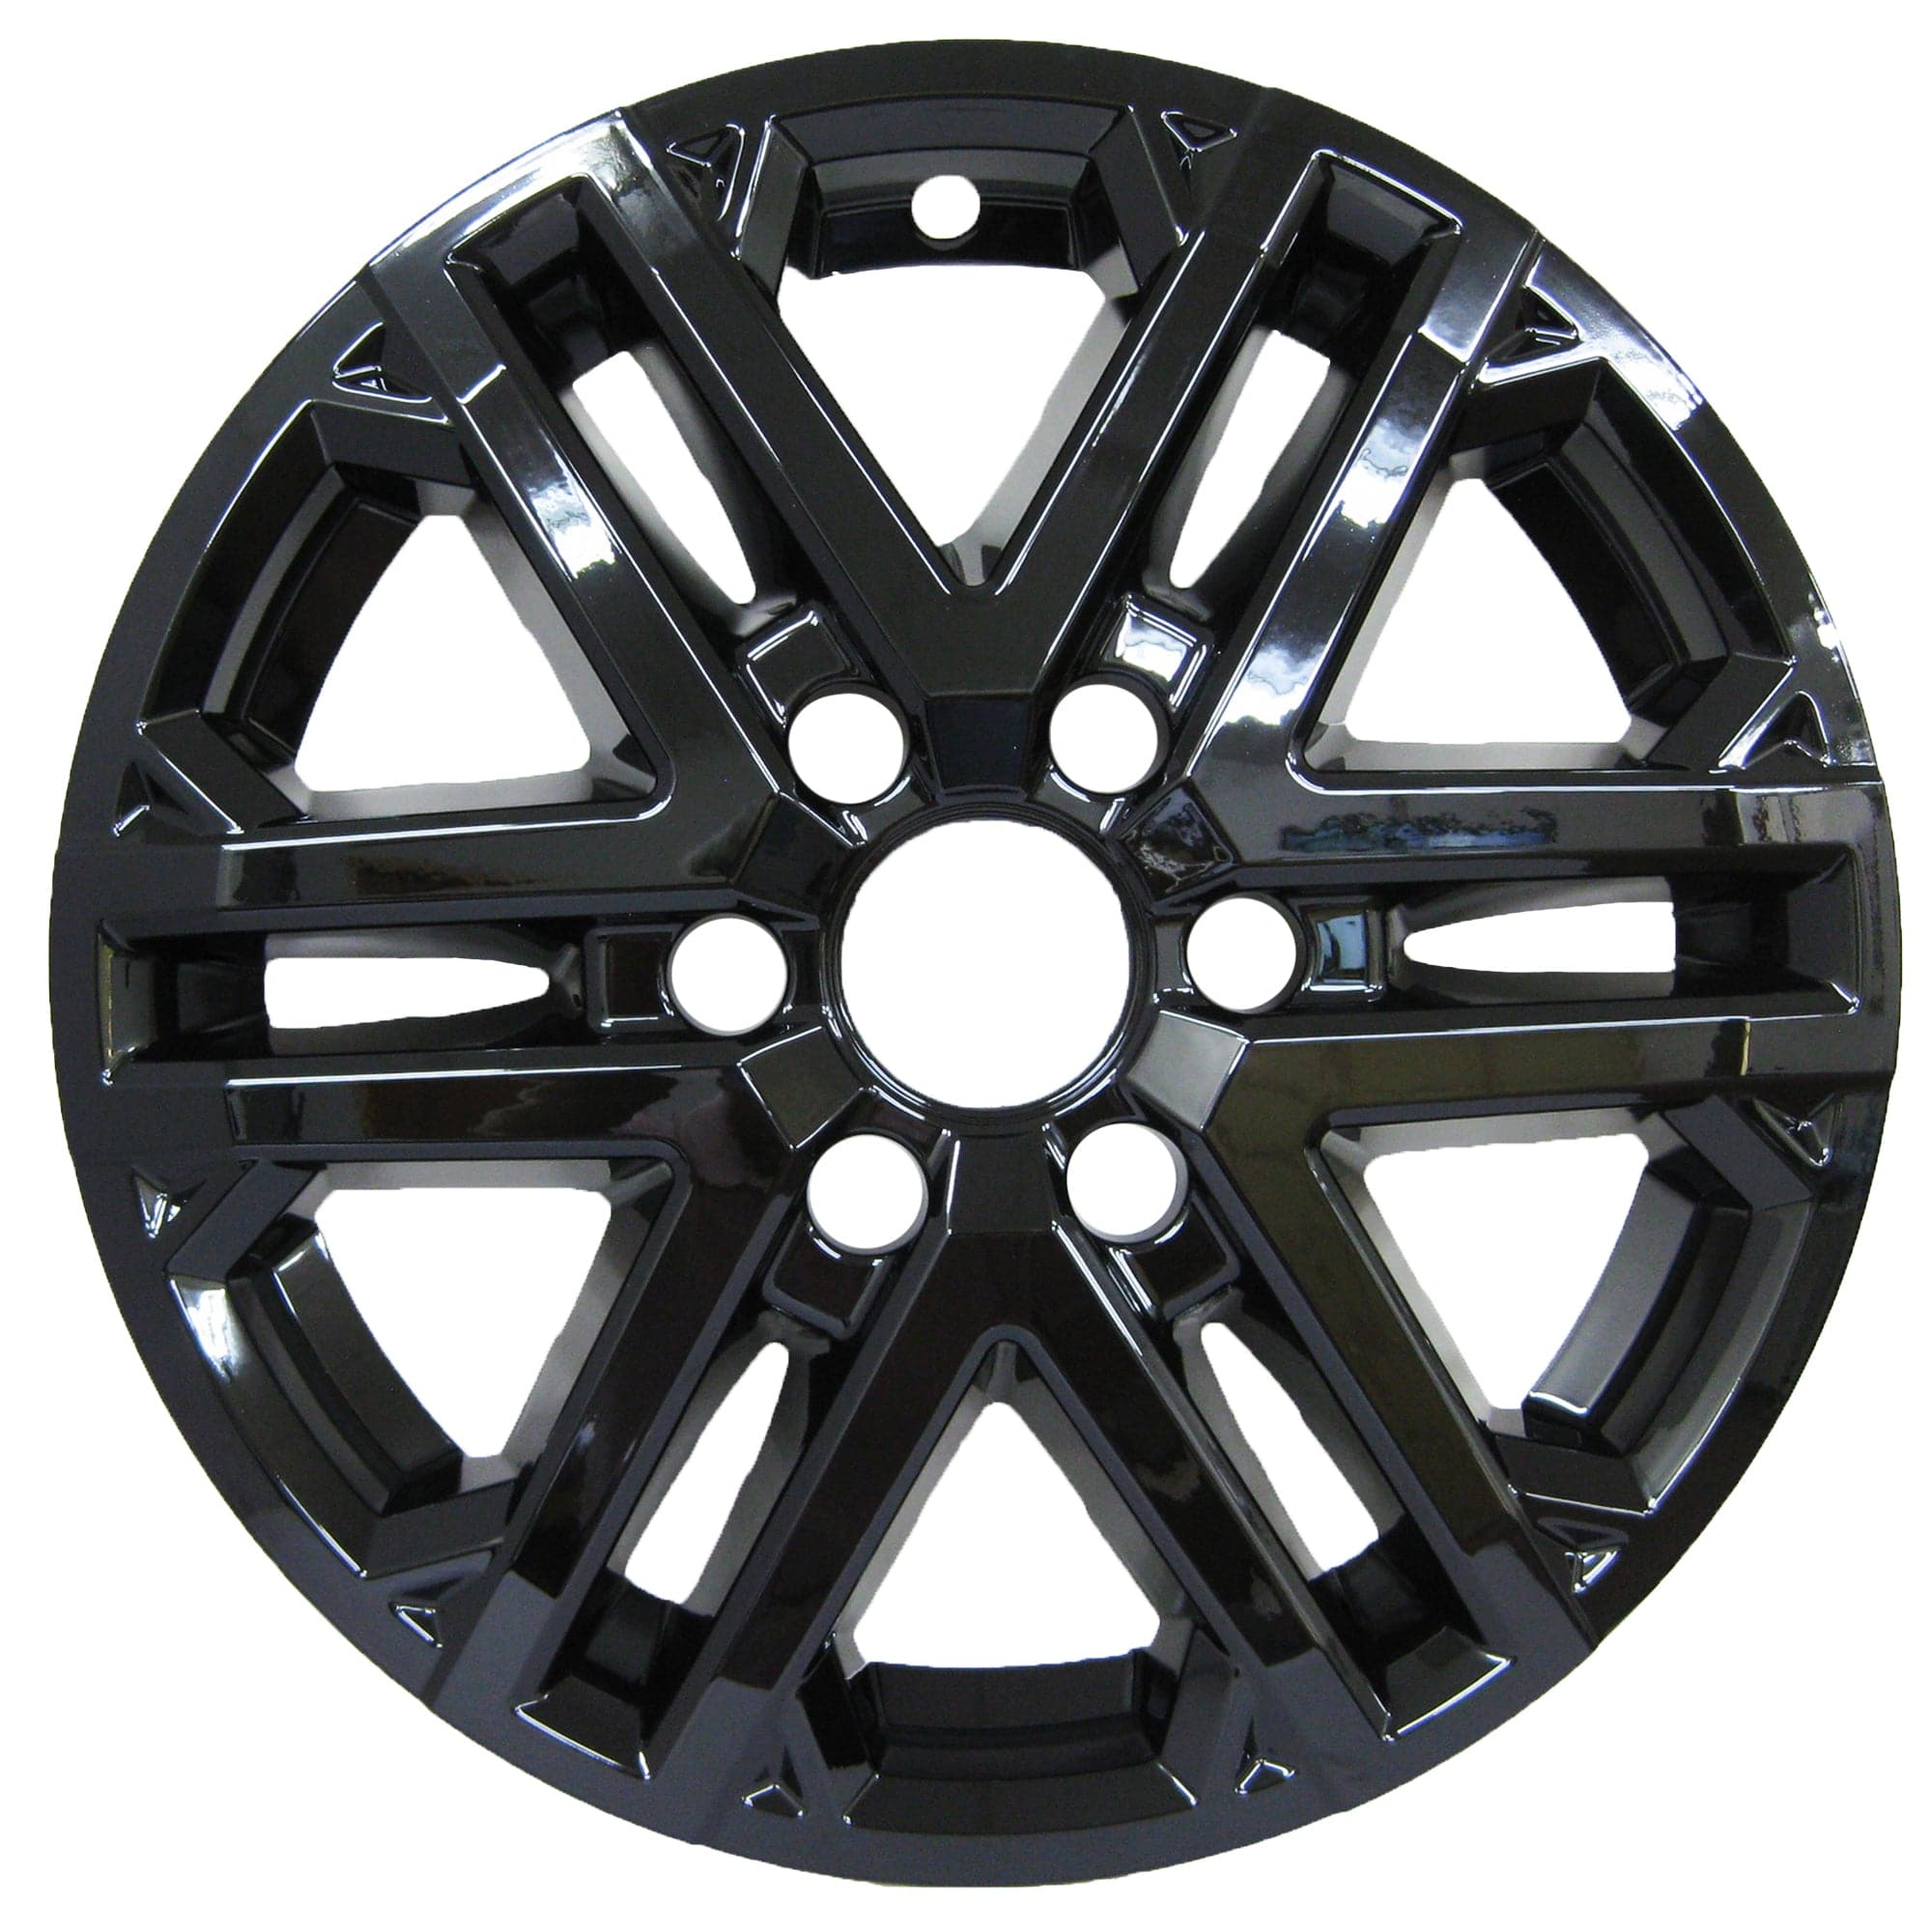 PacRim 8122-GB 18" Toyota Tundra (22-23) Gloss Black Wheel Skin Set